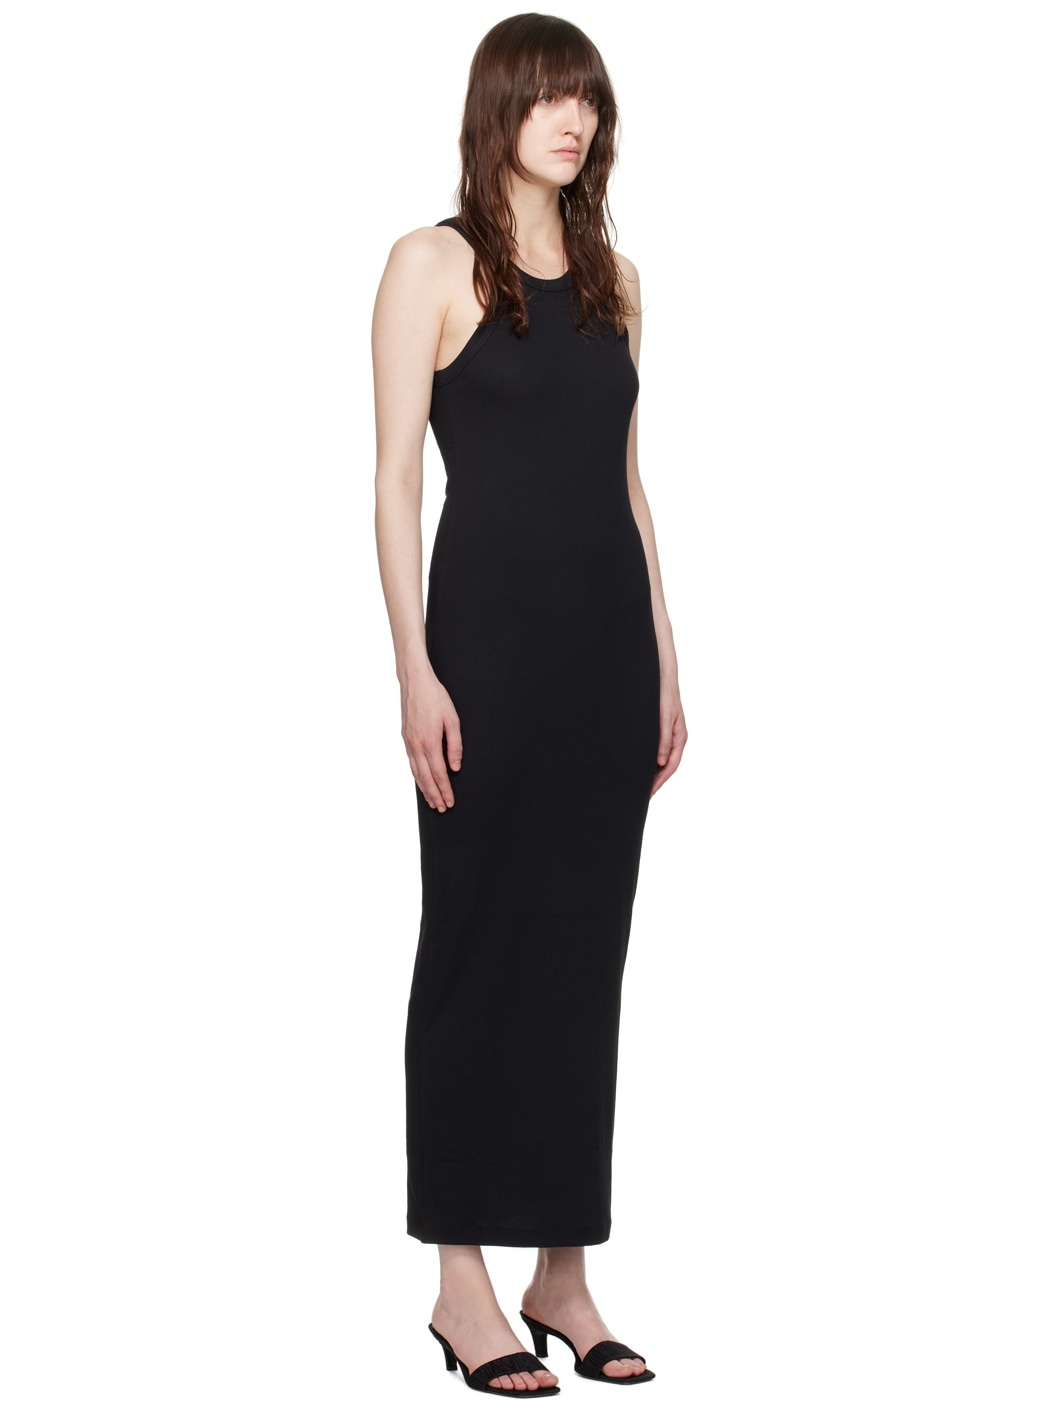 Black Curved Maxi Dress - 2